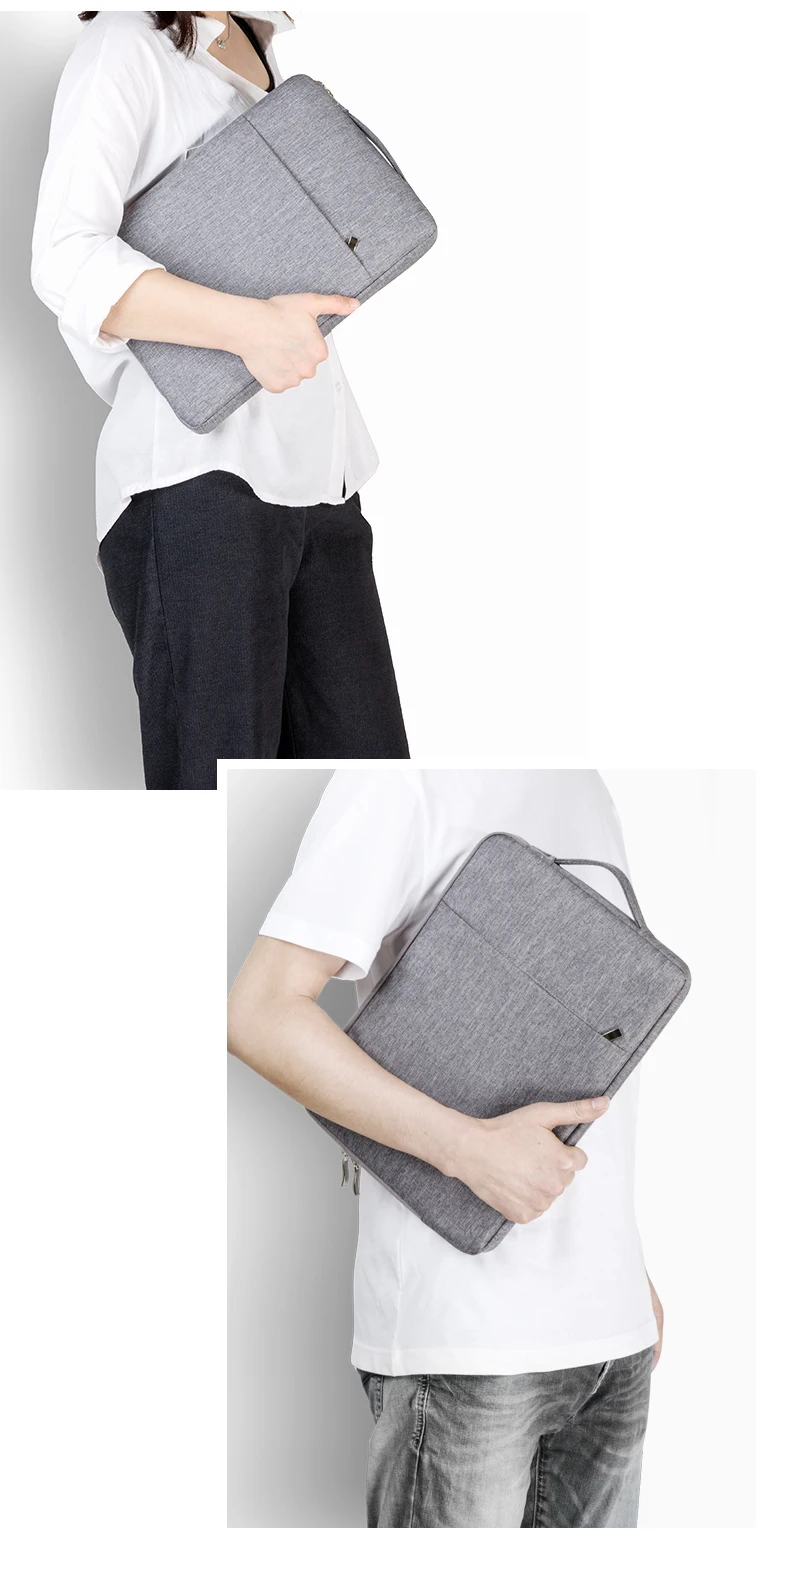 Чехол-сумочка для нового iPad 10,2, водонепроницаемый чехол на молнии, сумка-чехол для iPad 7th Gen 10,2, чехол для планшета, сумка